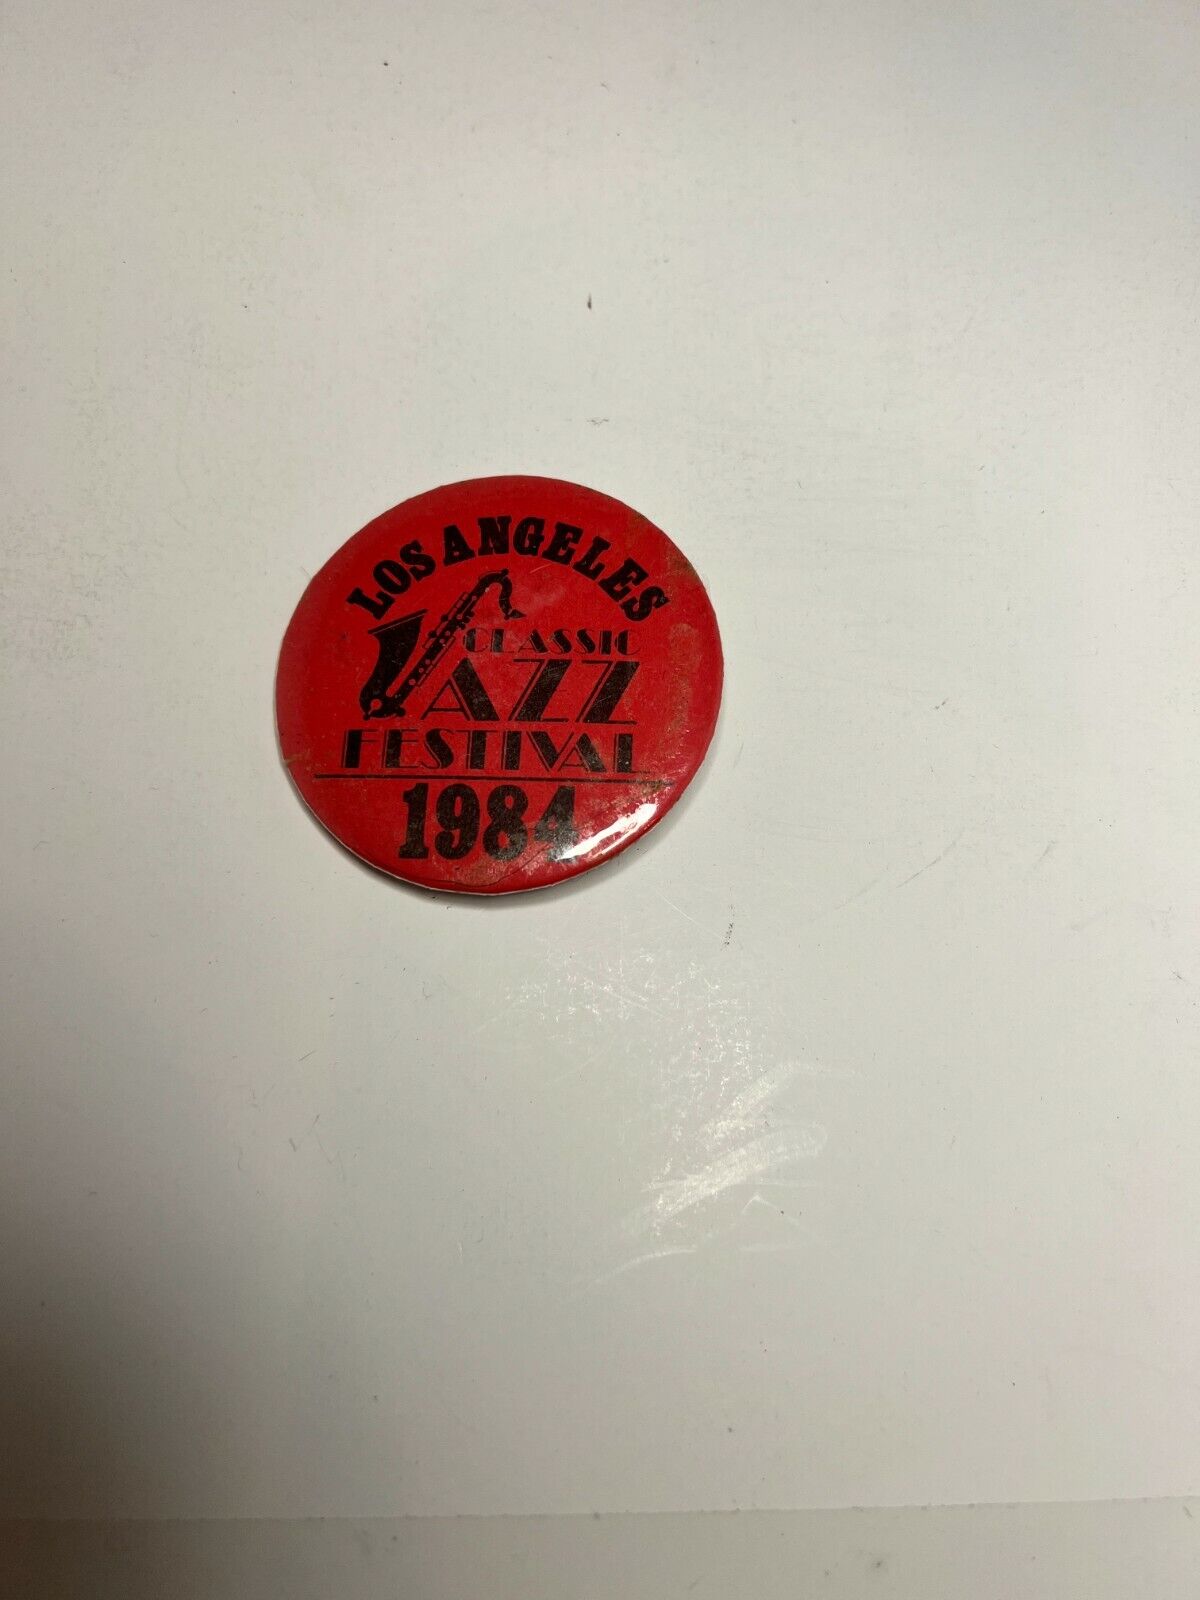 1984 LA Classic Jazz Festival Los Angeles California Vintage Button Pin Pinback